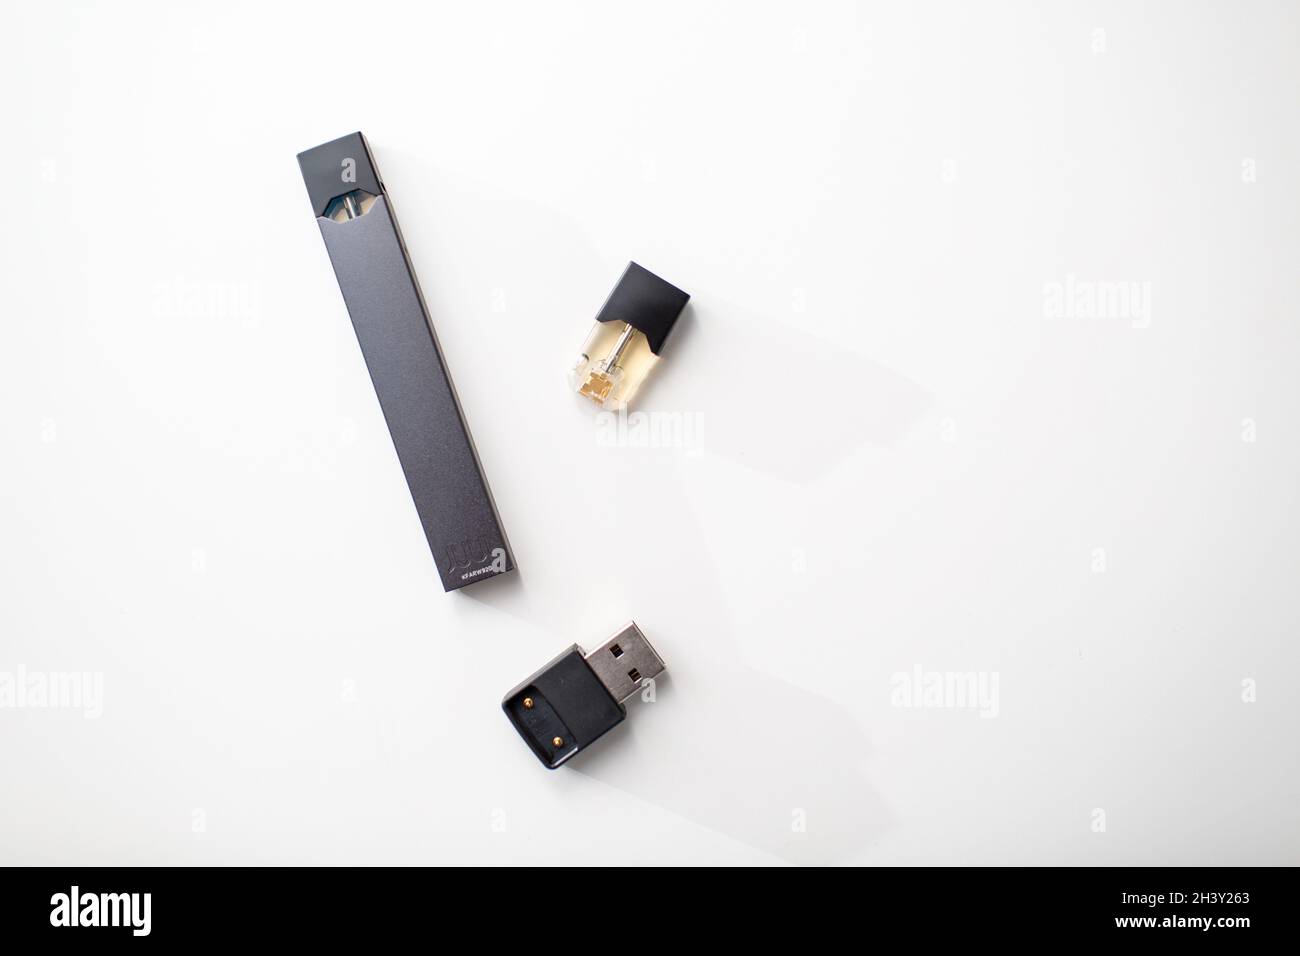 Juul e-cigarette nicotine vapor stick and pods Stock Photo